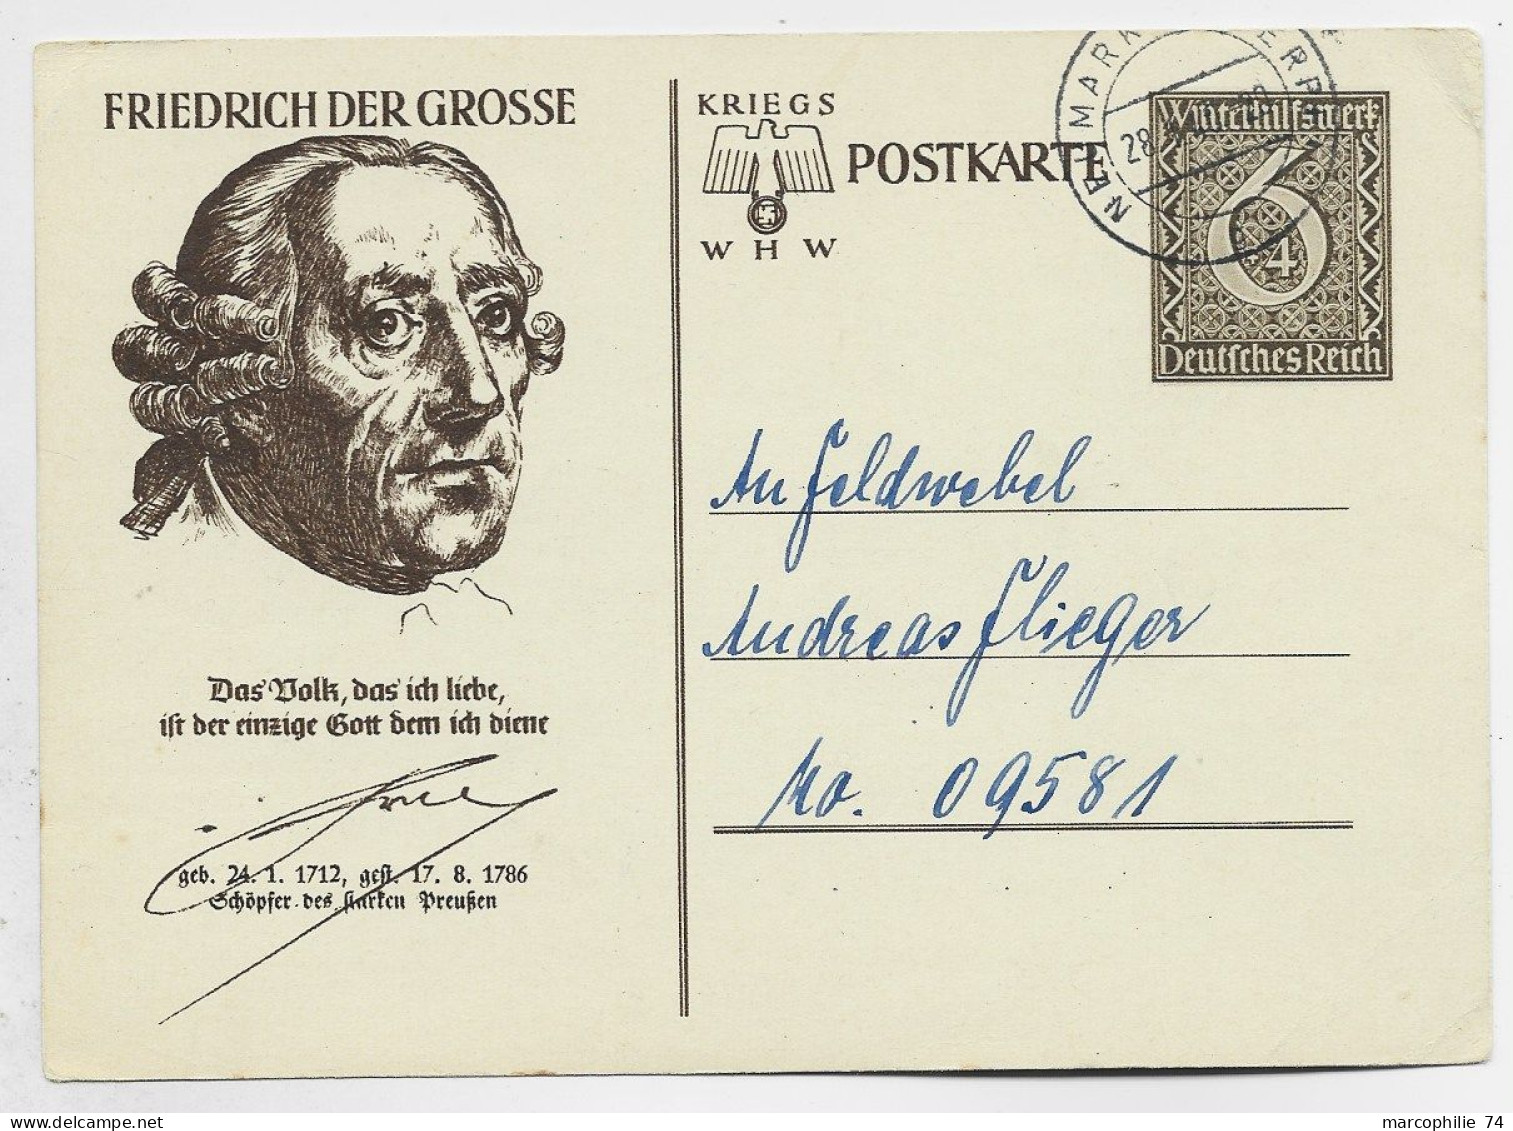 GERMANY REICH ENTIER 6C POSTKARTE FRIEDRICH GROSSE 28.1.1940 TO N°09581 - Cartes Postales